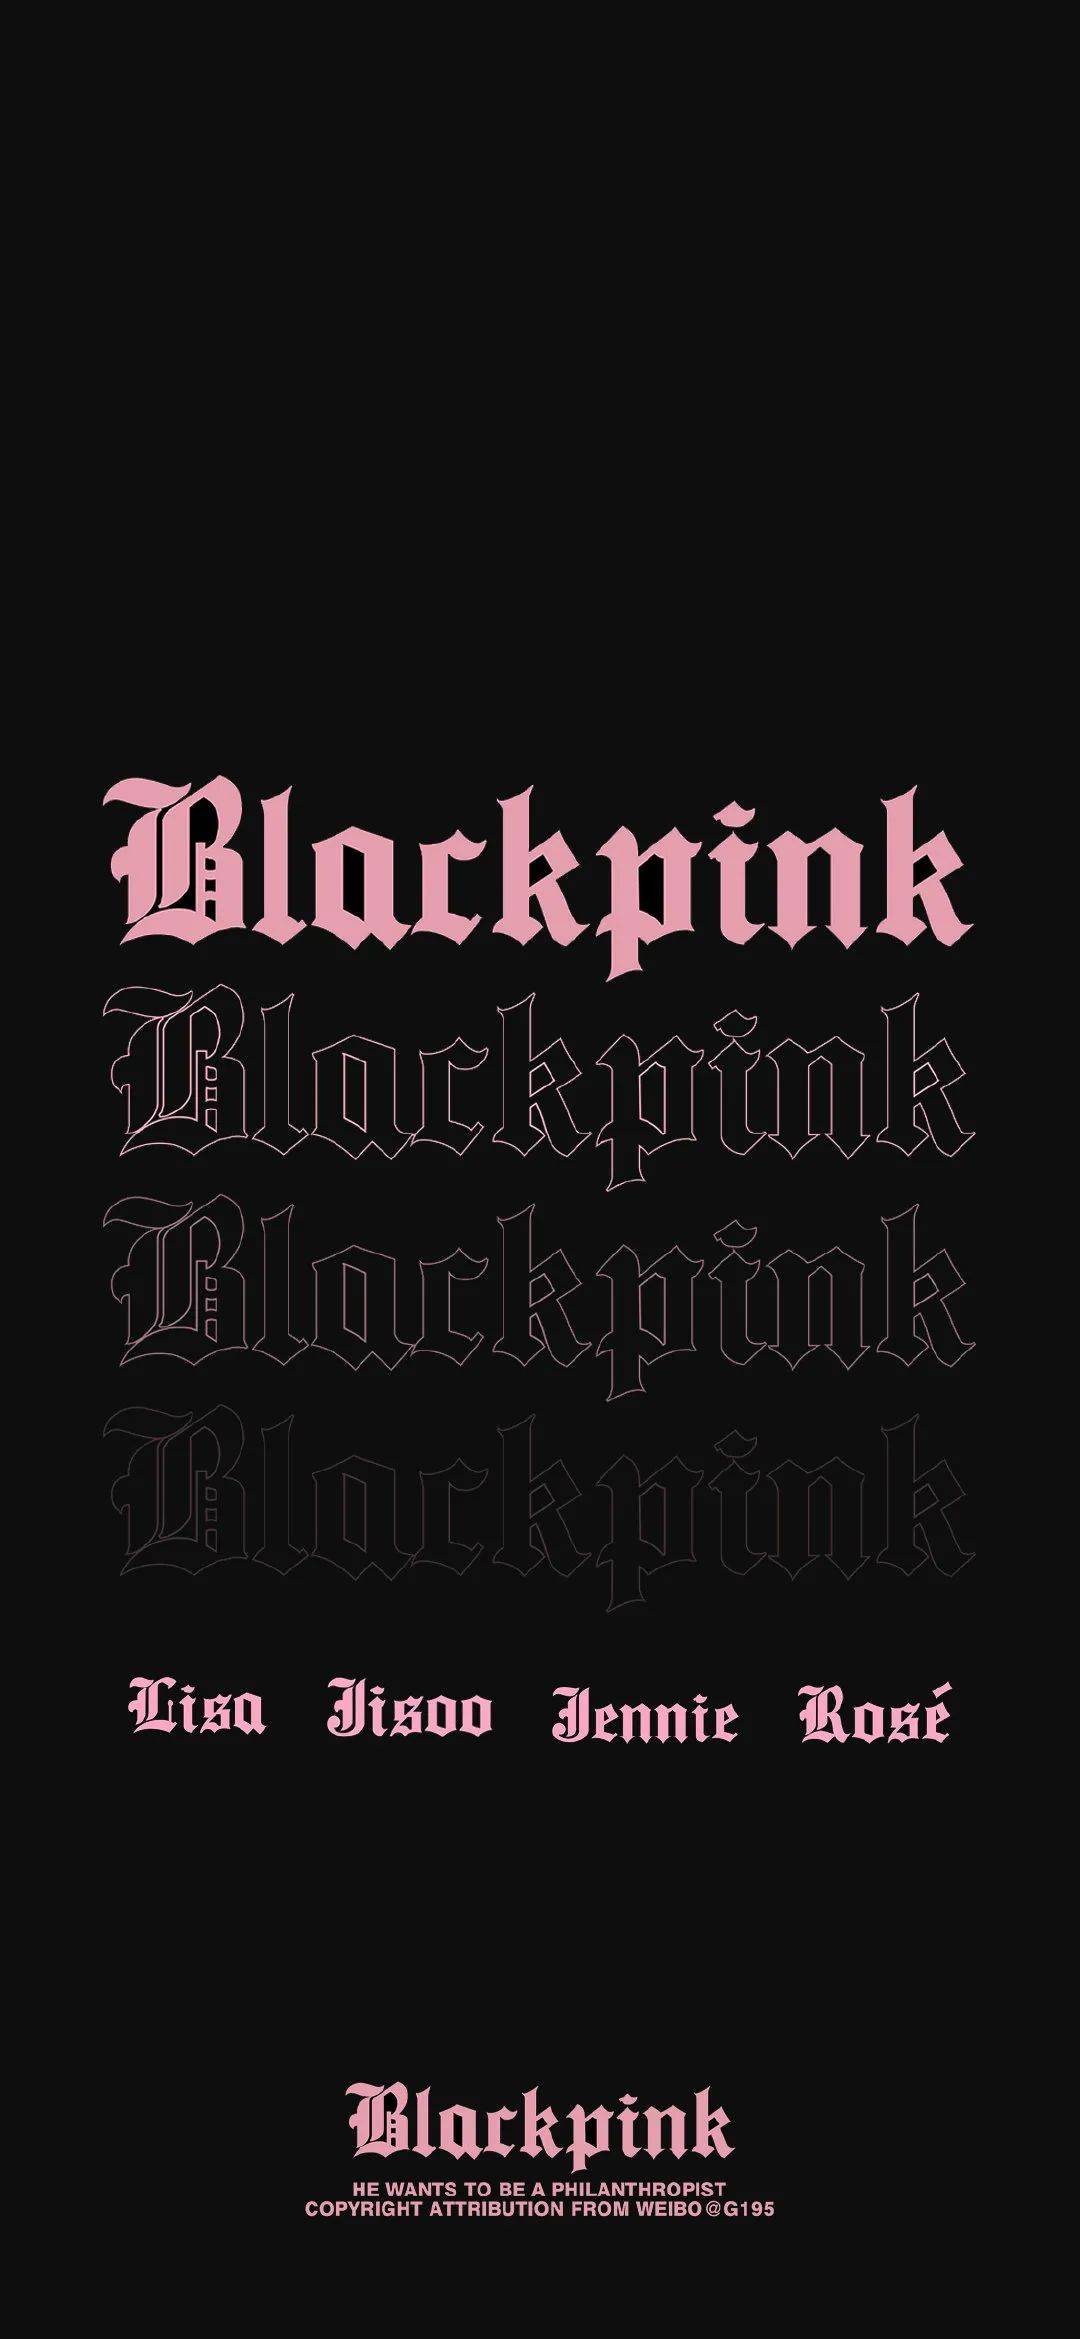 blackpink特殊字体复制图片